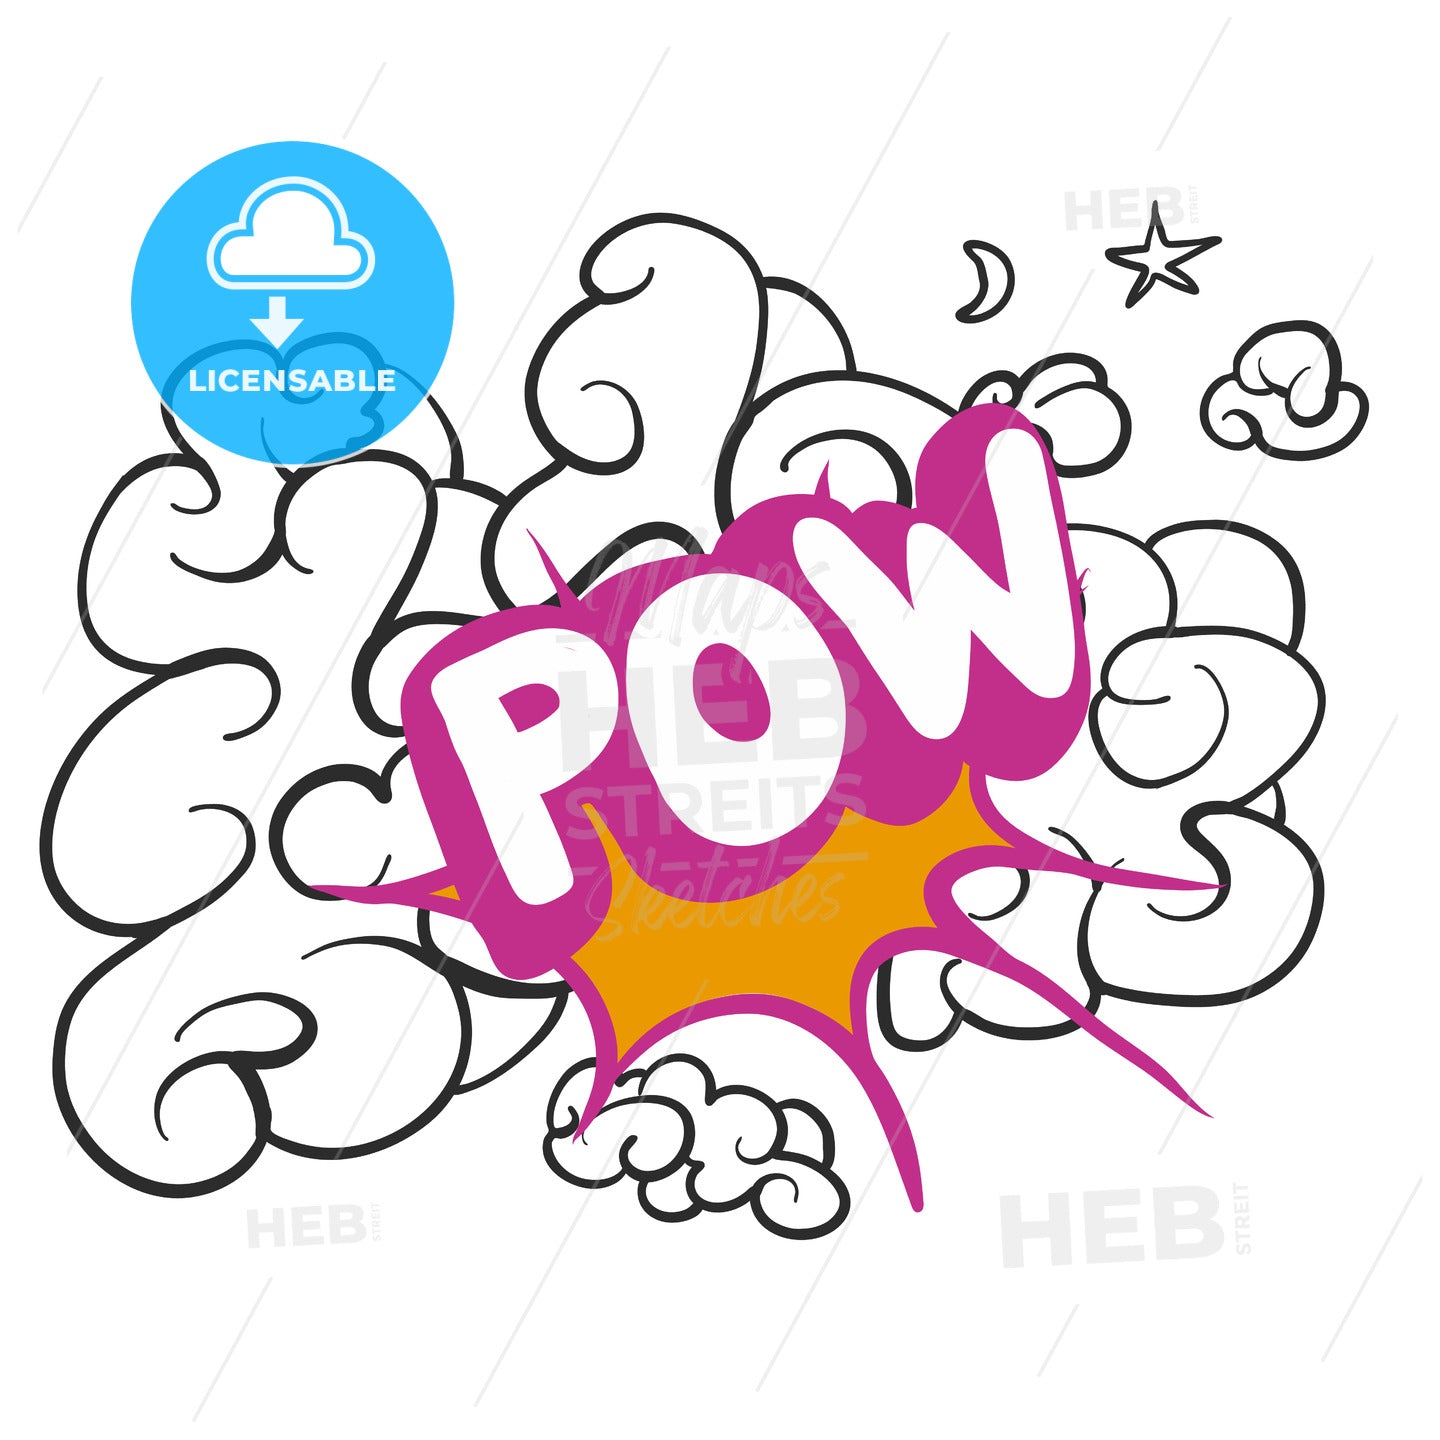 POW Shoot on Cloud Sketch – instant download